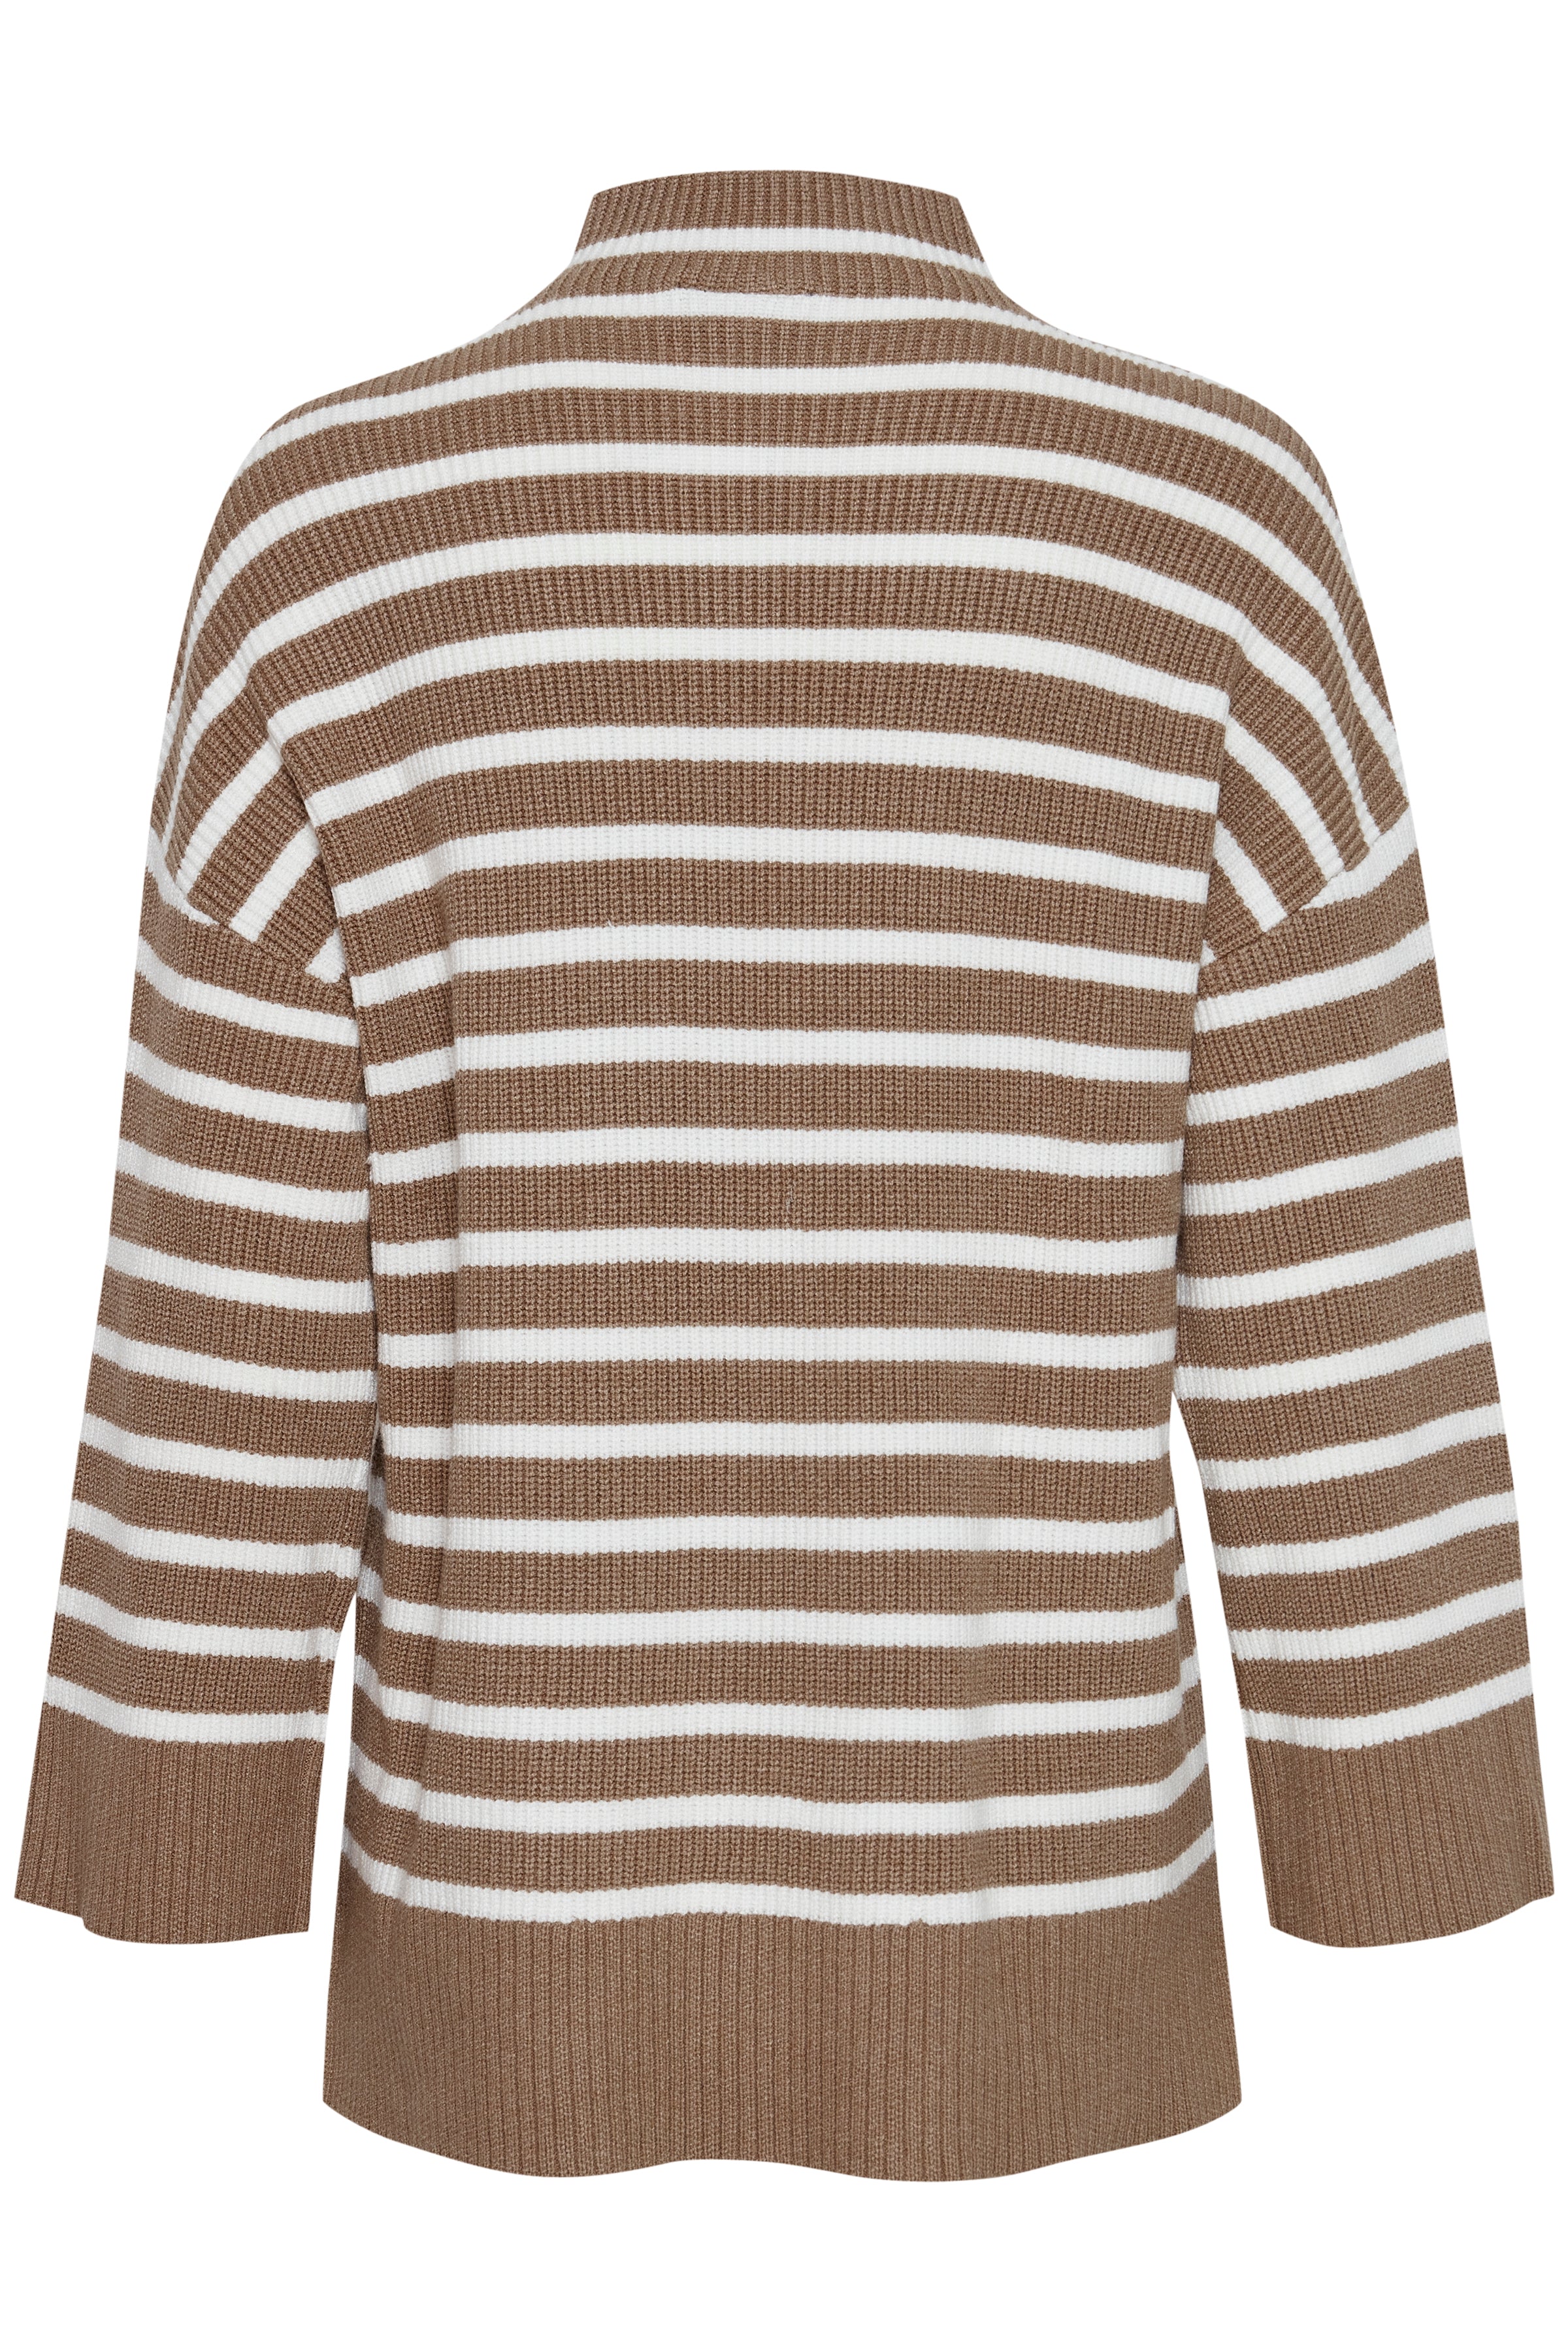 FRally Stripe Pullover